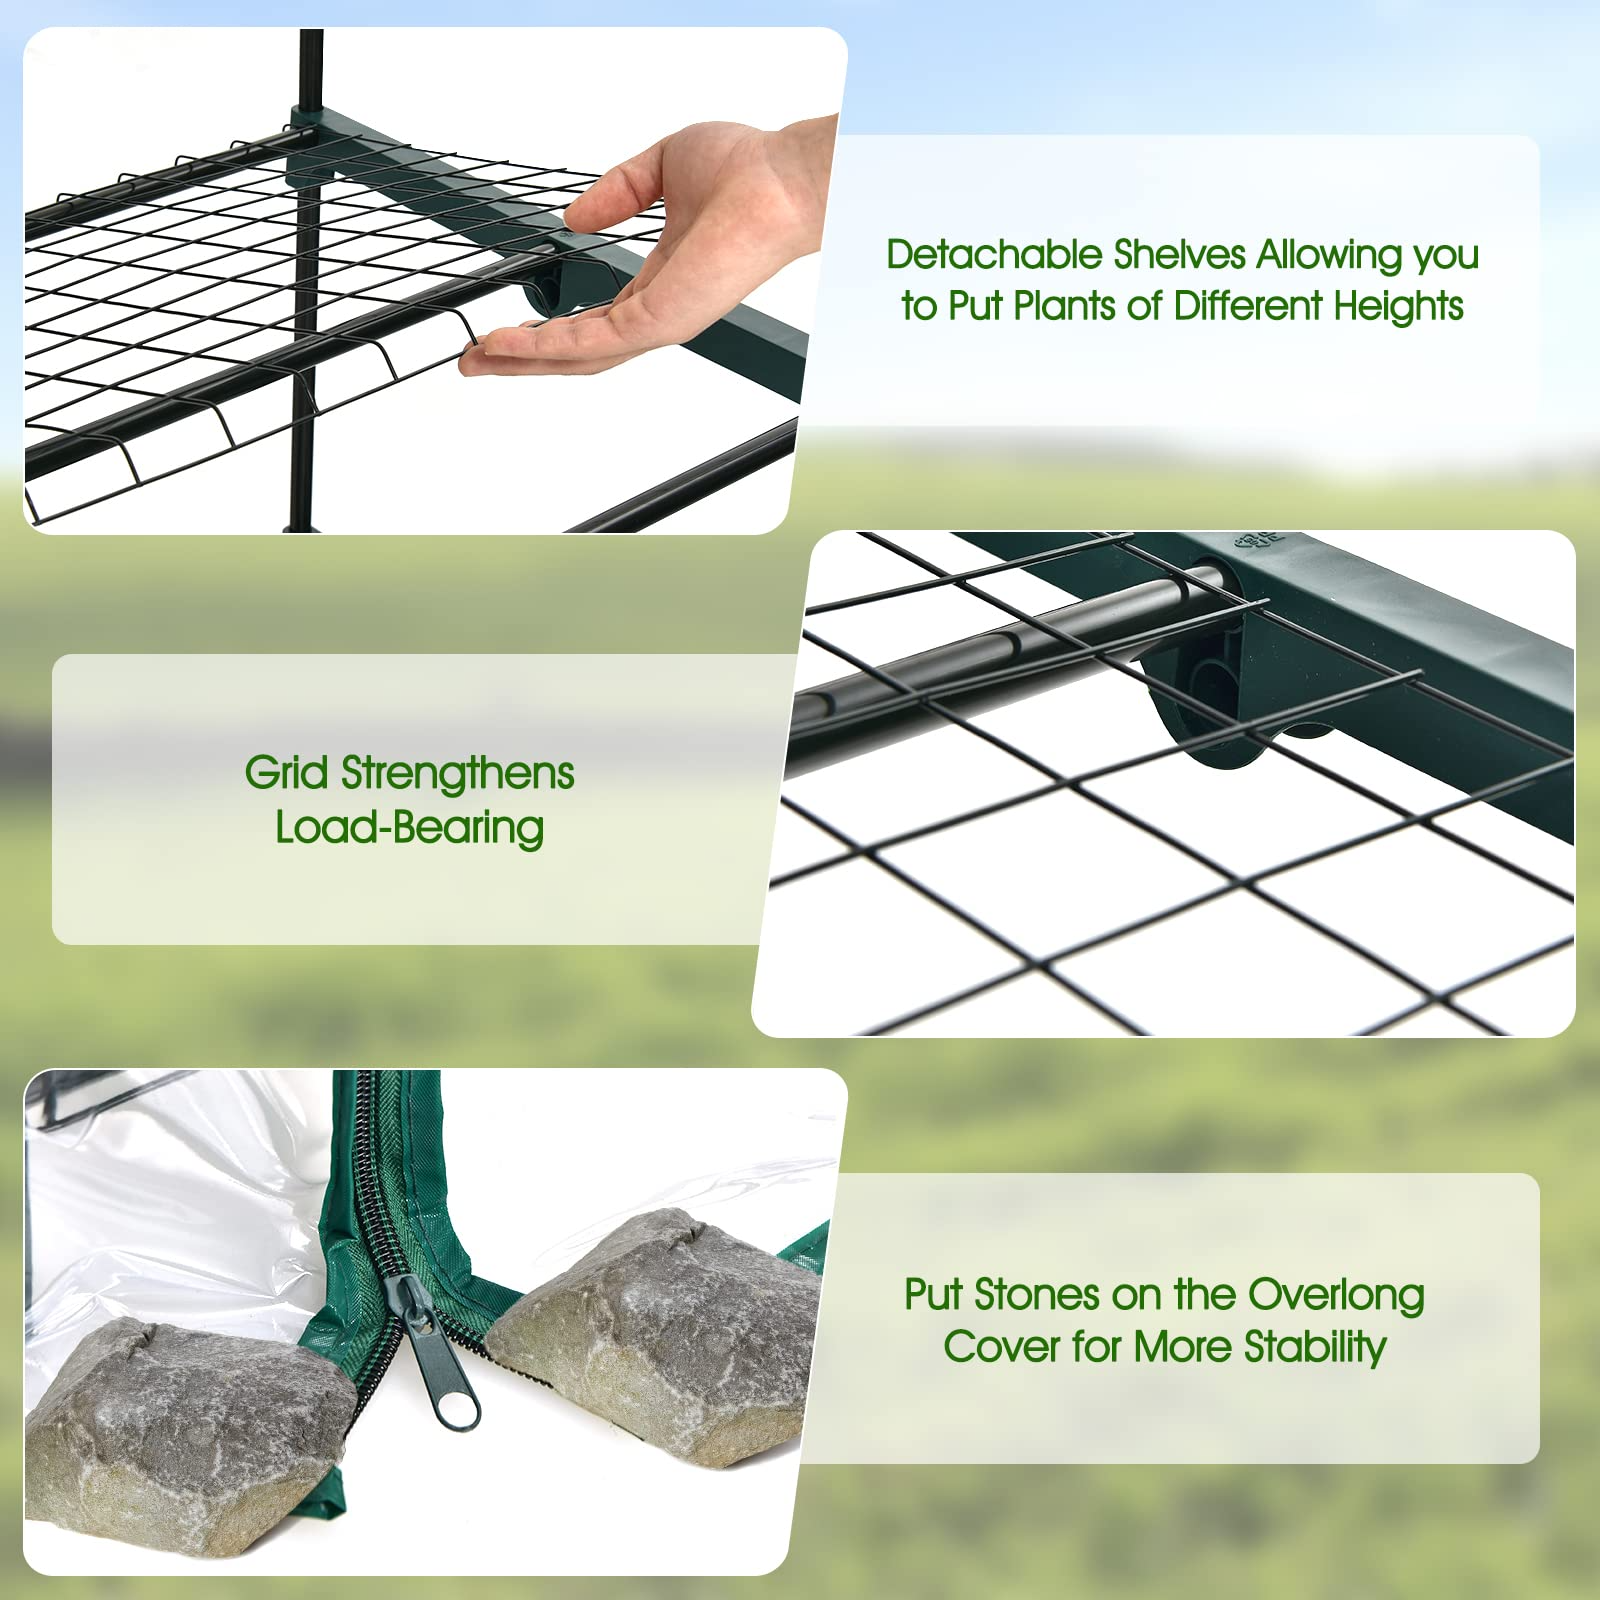 Portable Mini Greenhouse | Gardening Tent W/ 4-Tier Rack